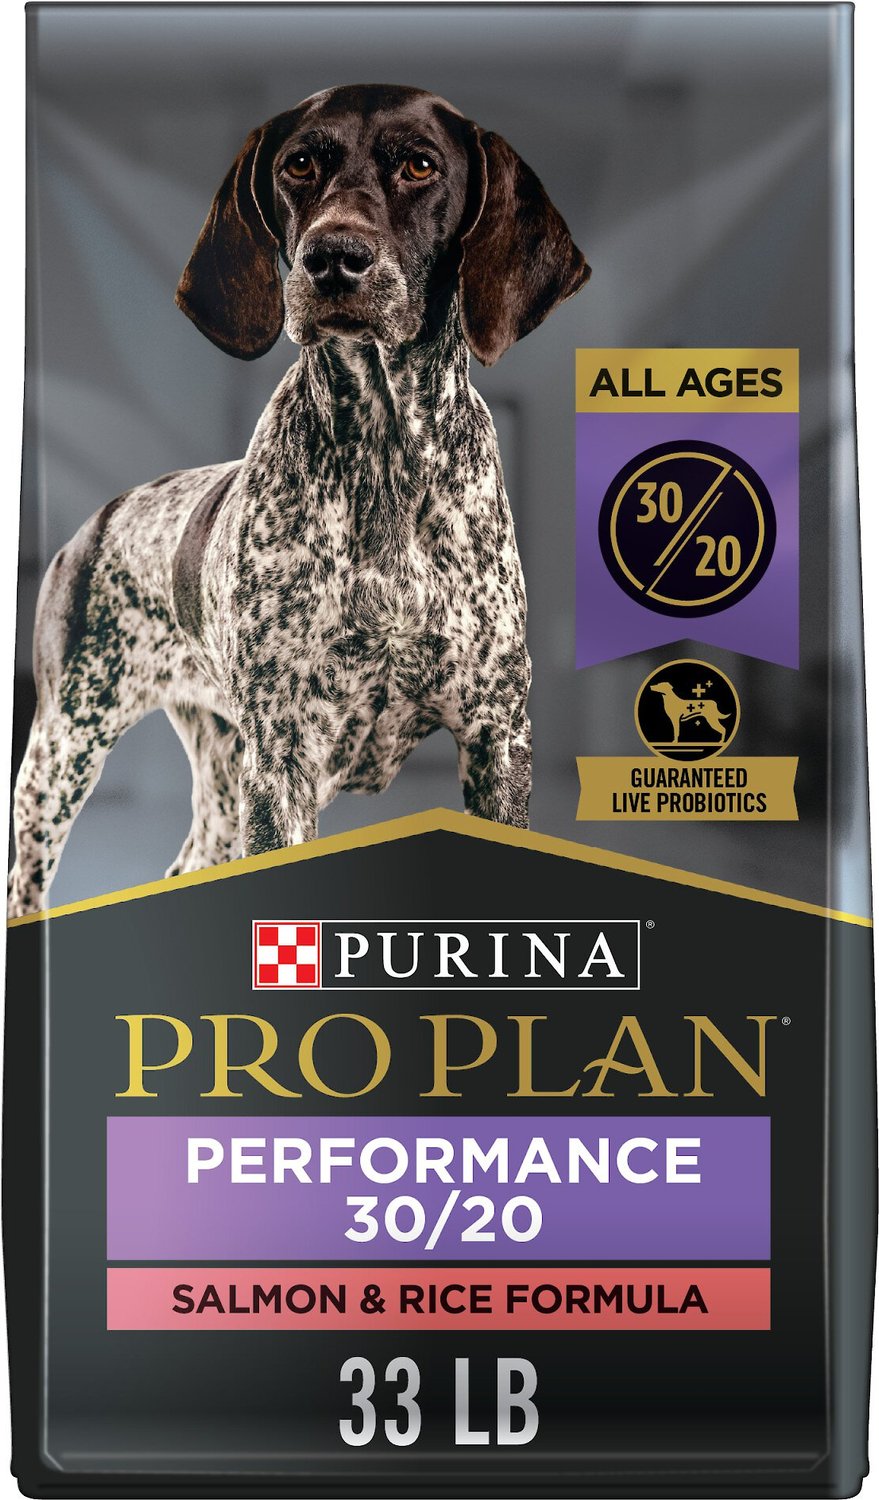 Purina Pro Plan Performance 30/20 Salmon & Rice Formula Dry Dog Food